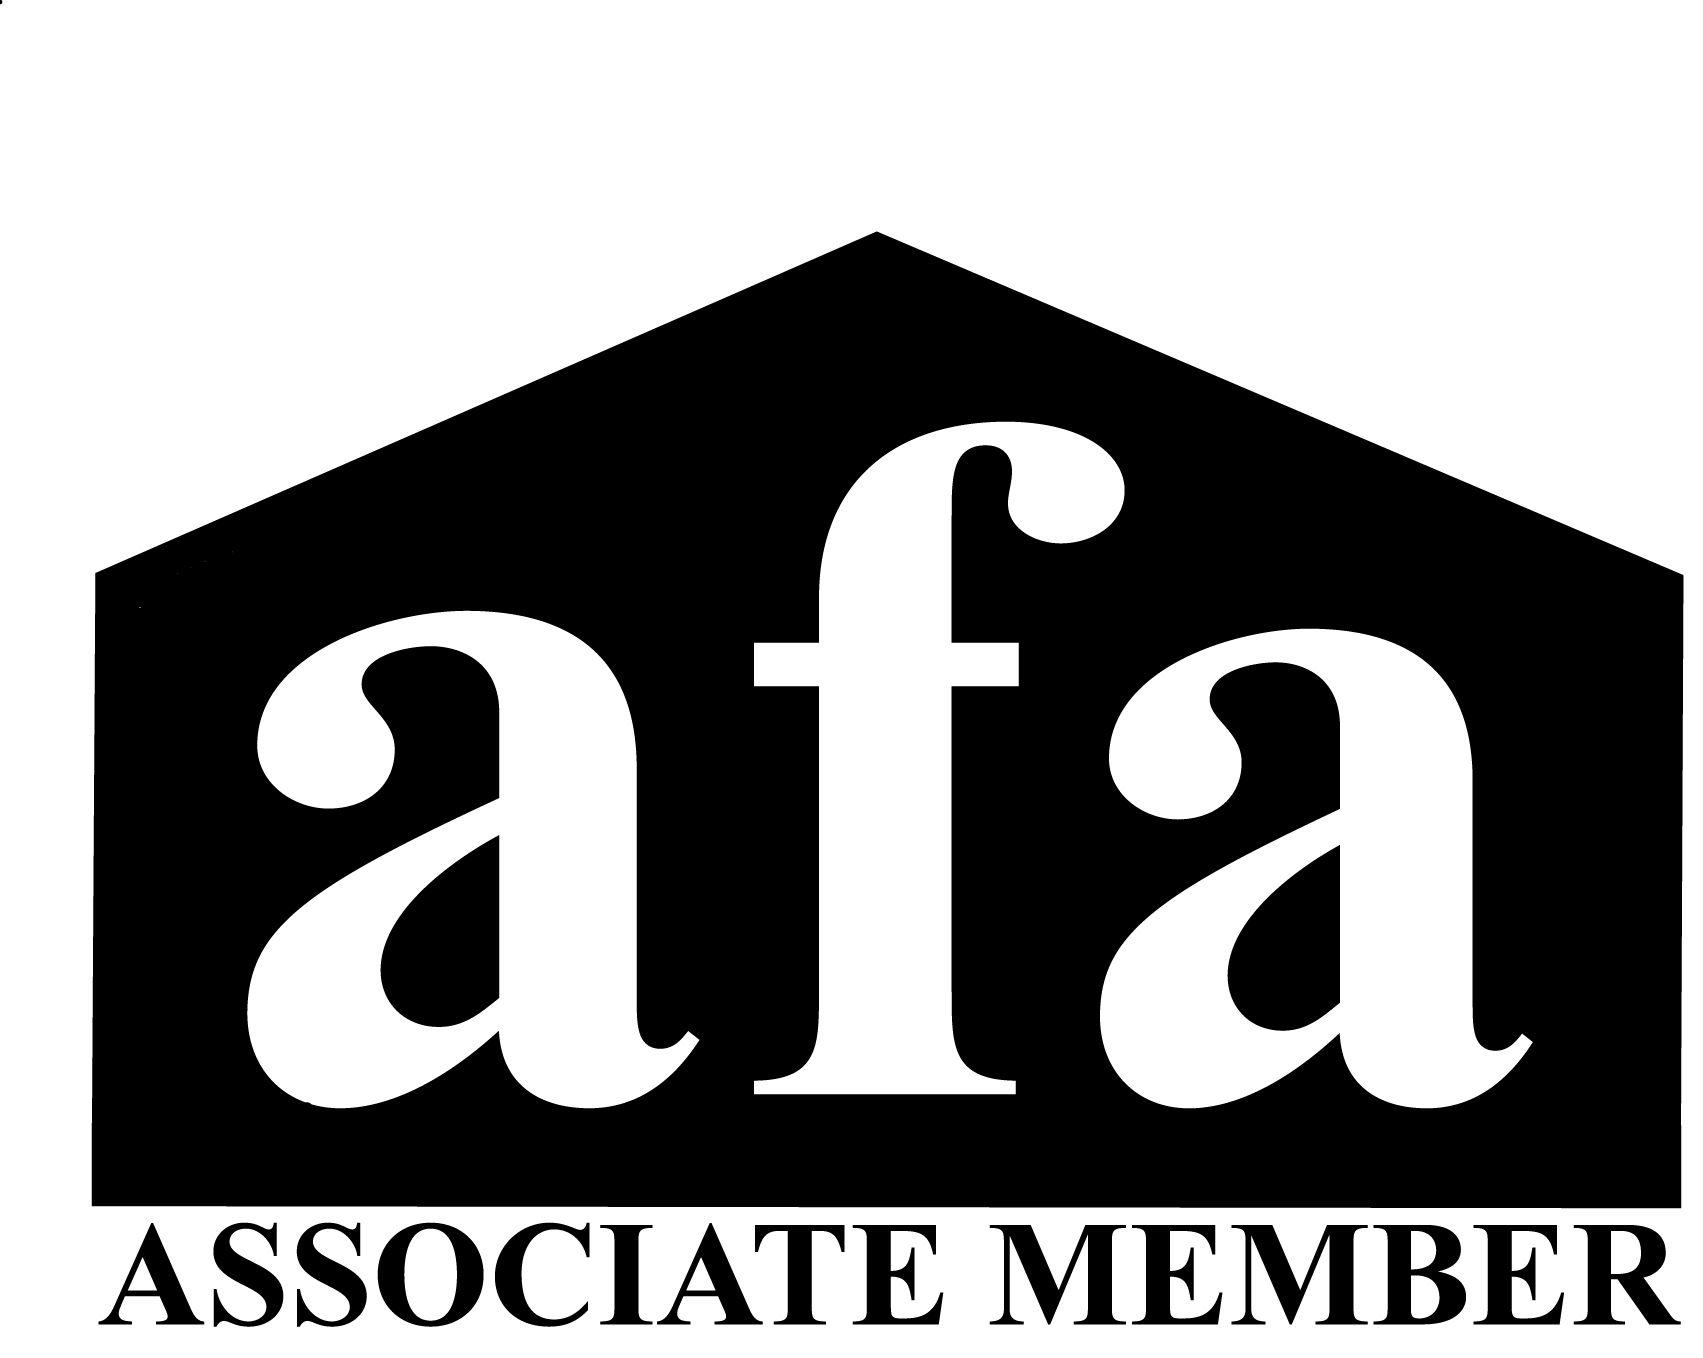 MBR Logo - AFA Associate Mbr logo - Fraternal